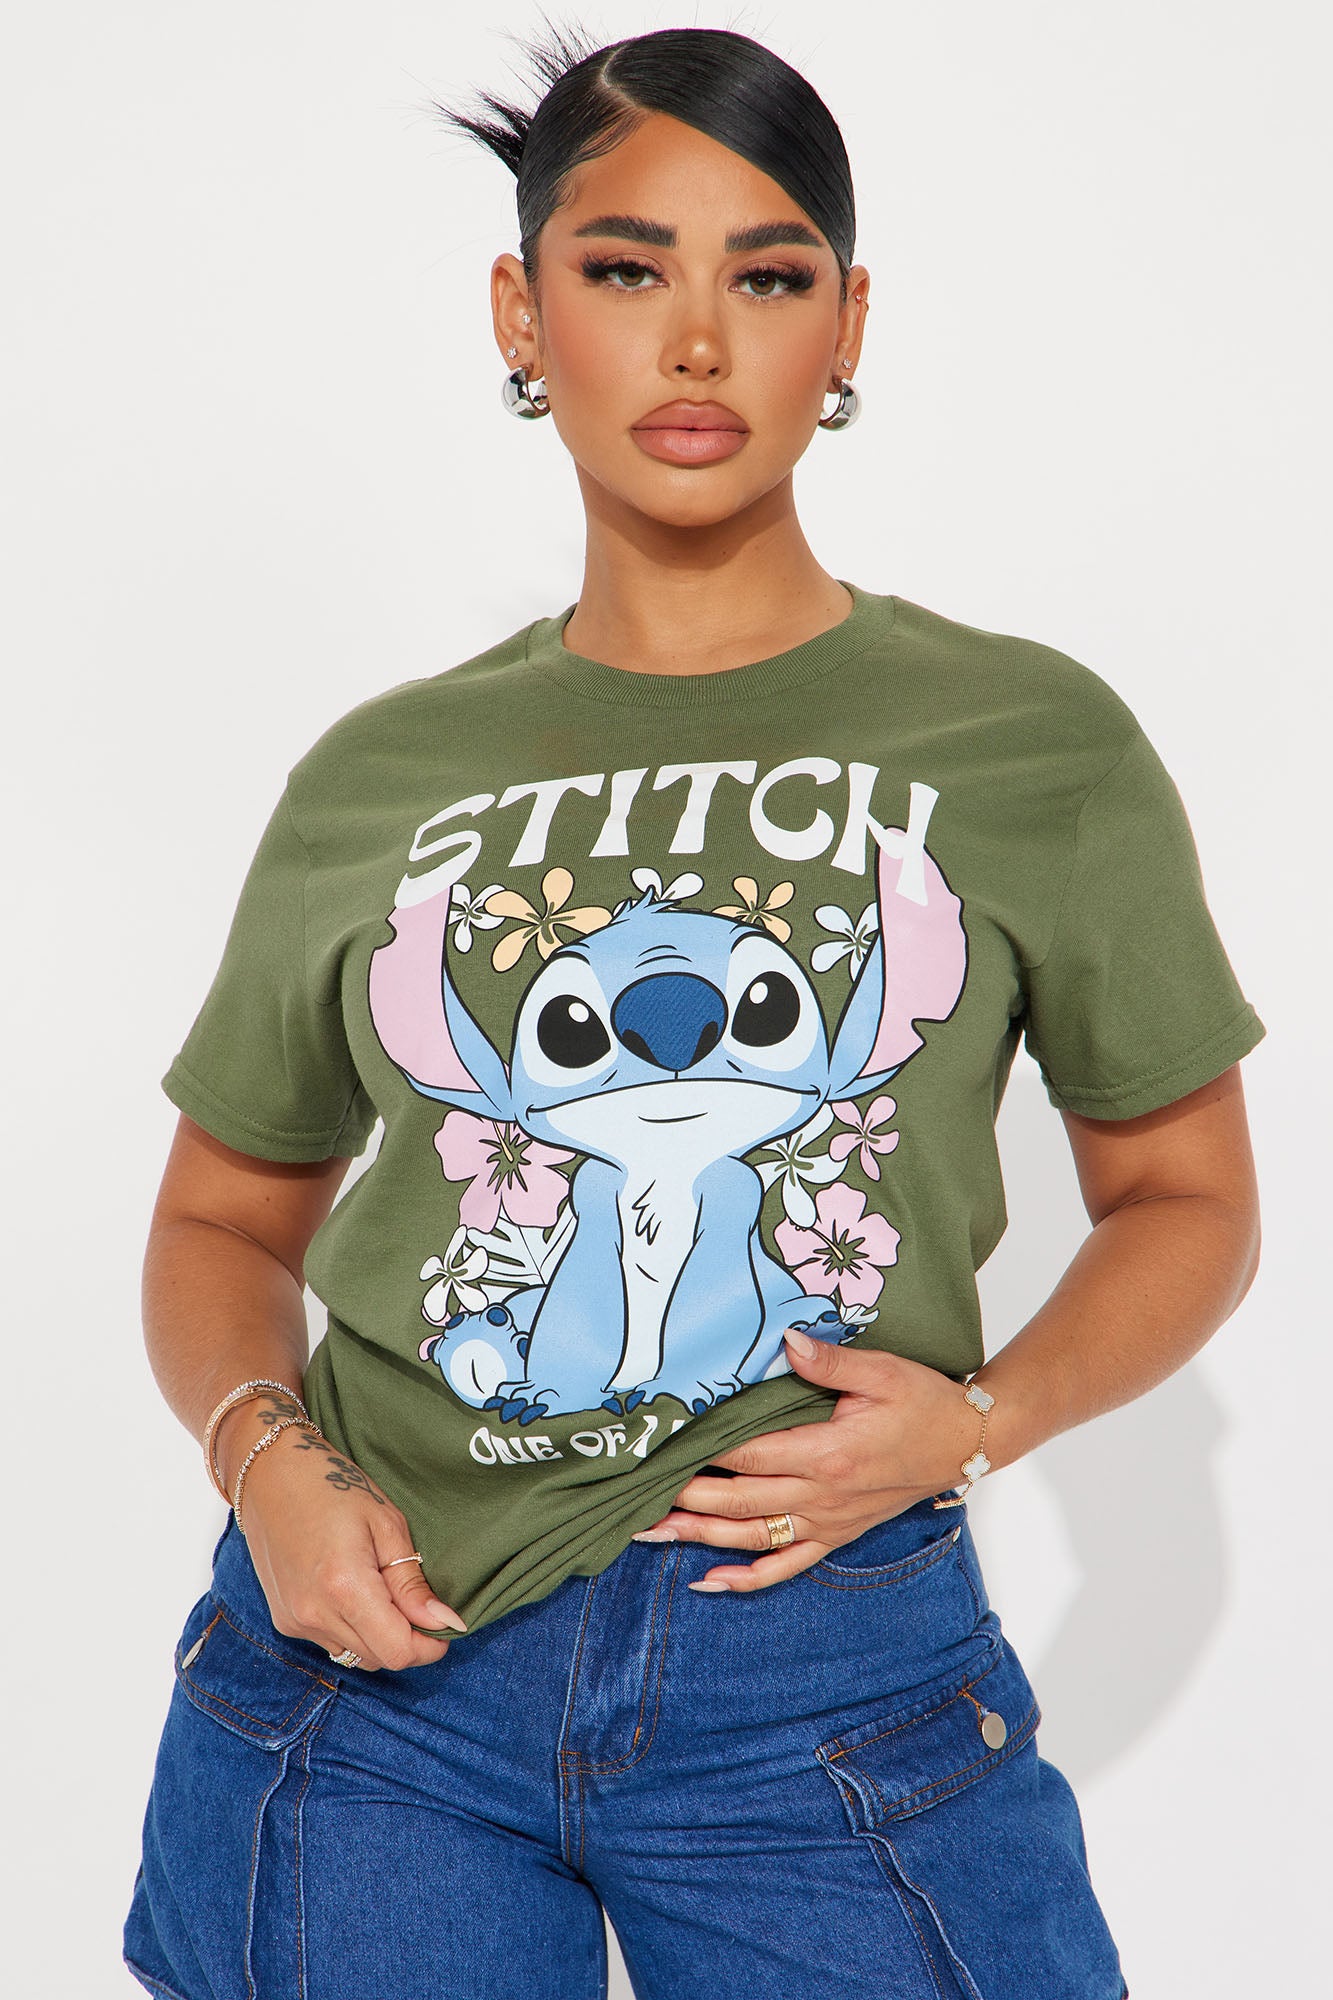 Stitch & Angel Graphic Tee - Blue  Fashion Nova, Screens Tops and